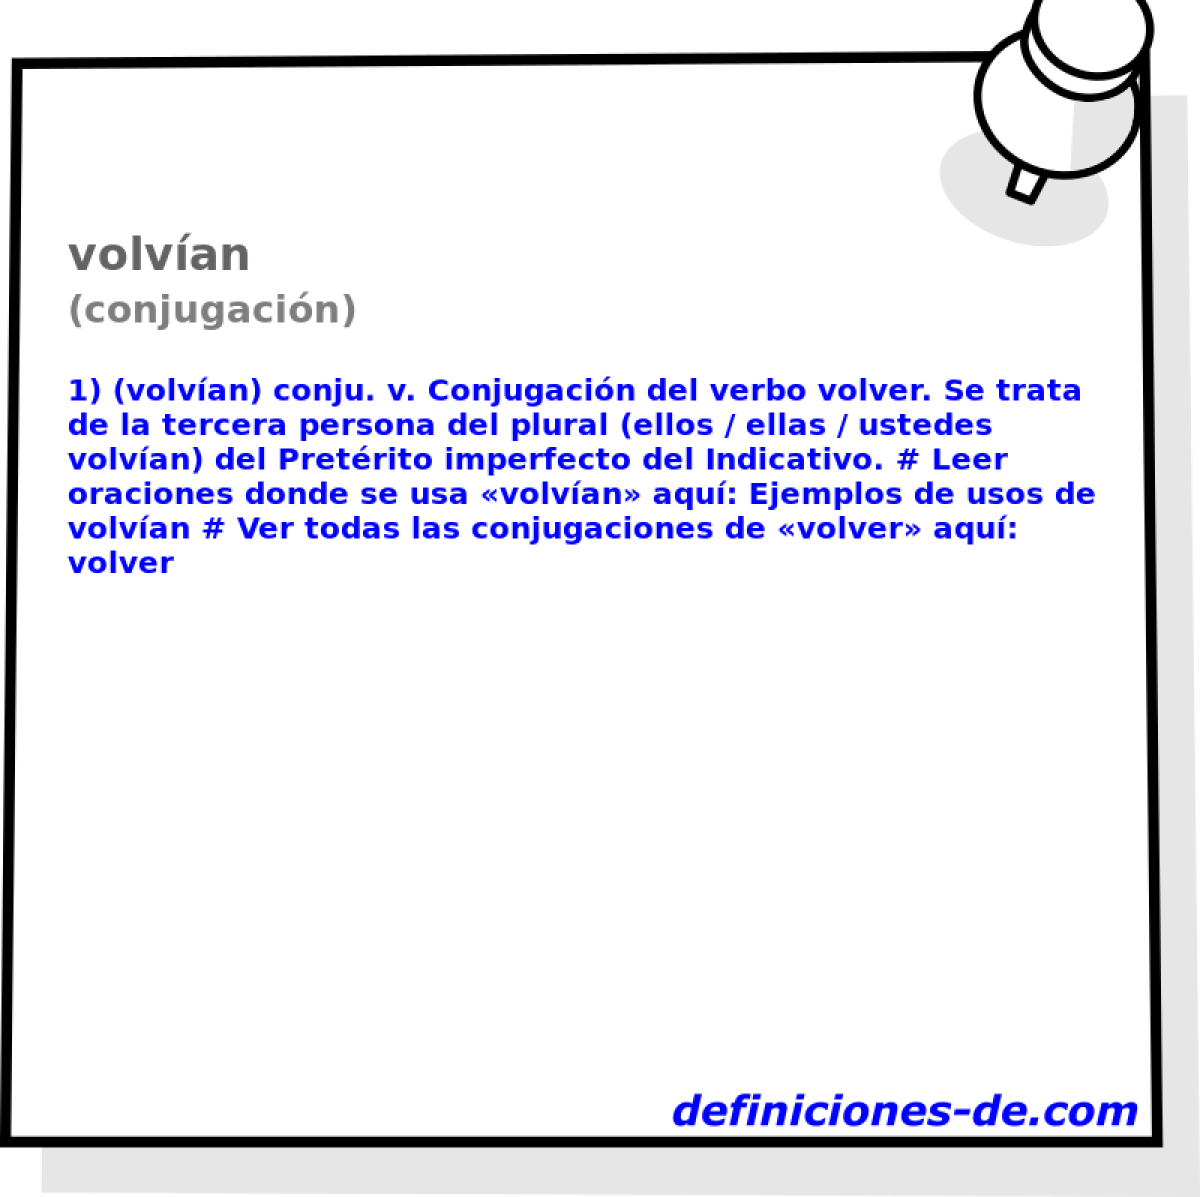 volvan (conjugacin)